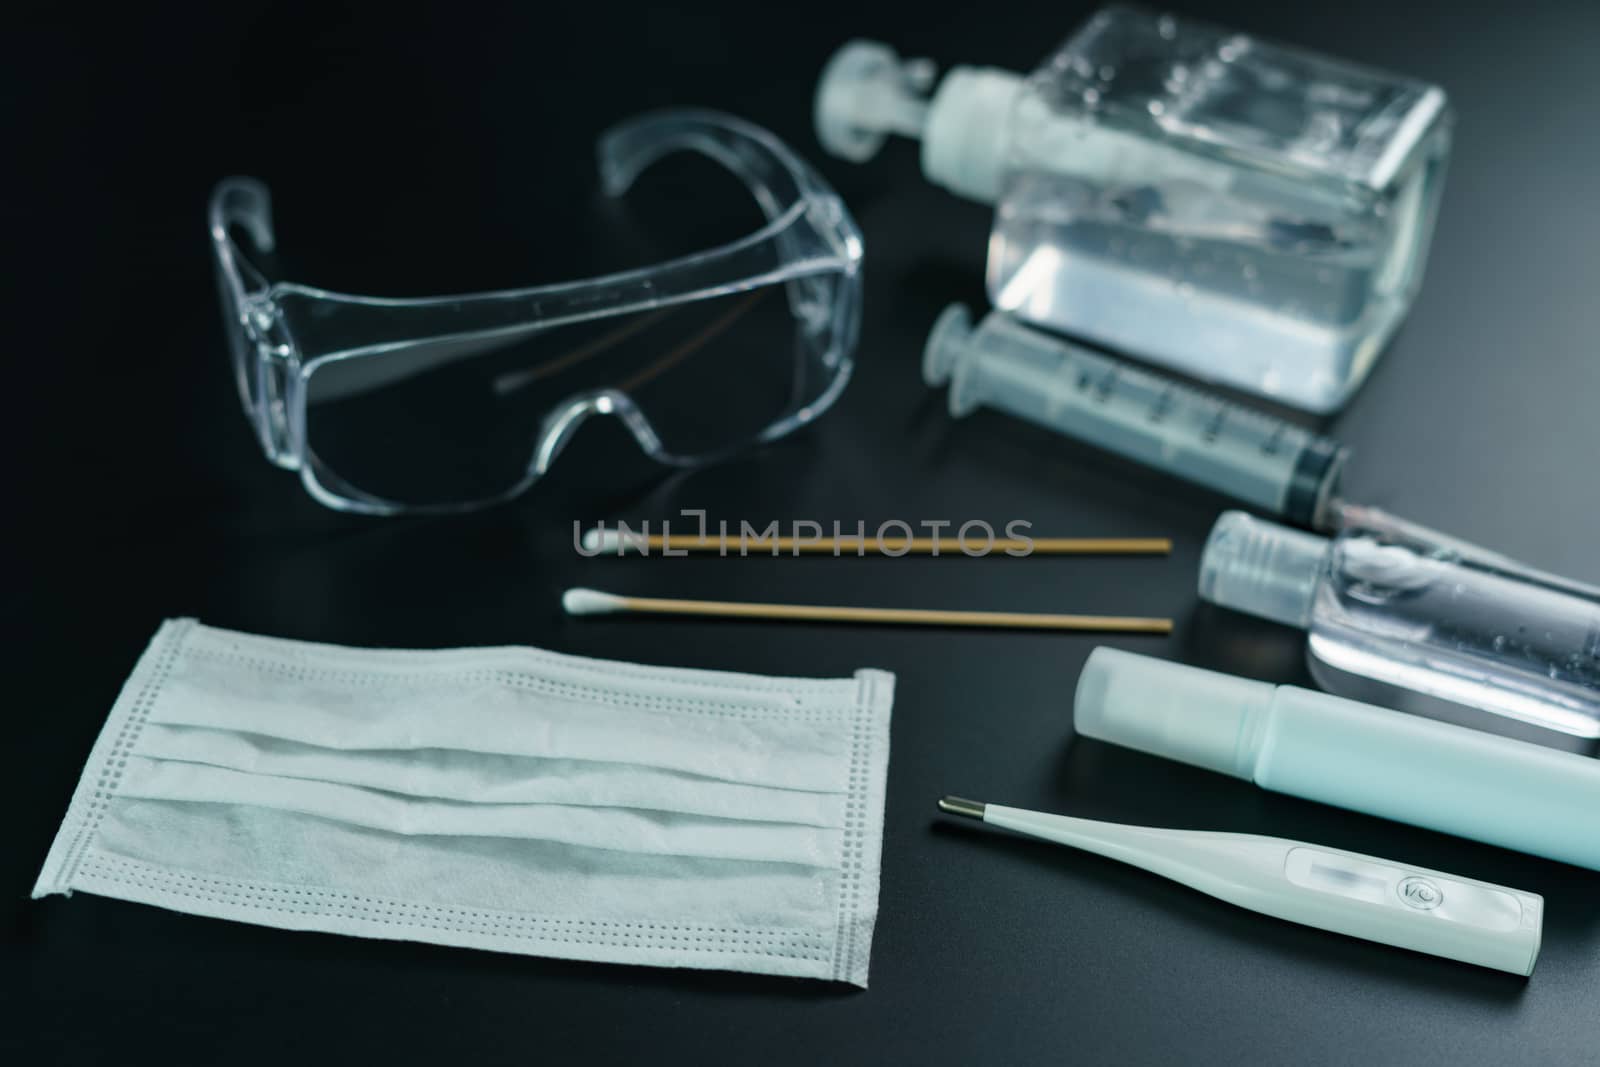 Corona virus medical equipment: Medical masks, safety glasses, s by sirawit99